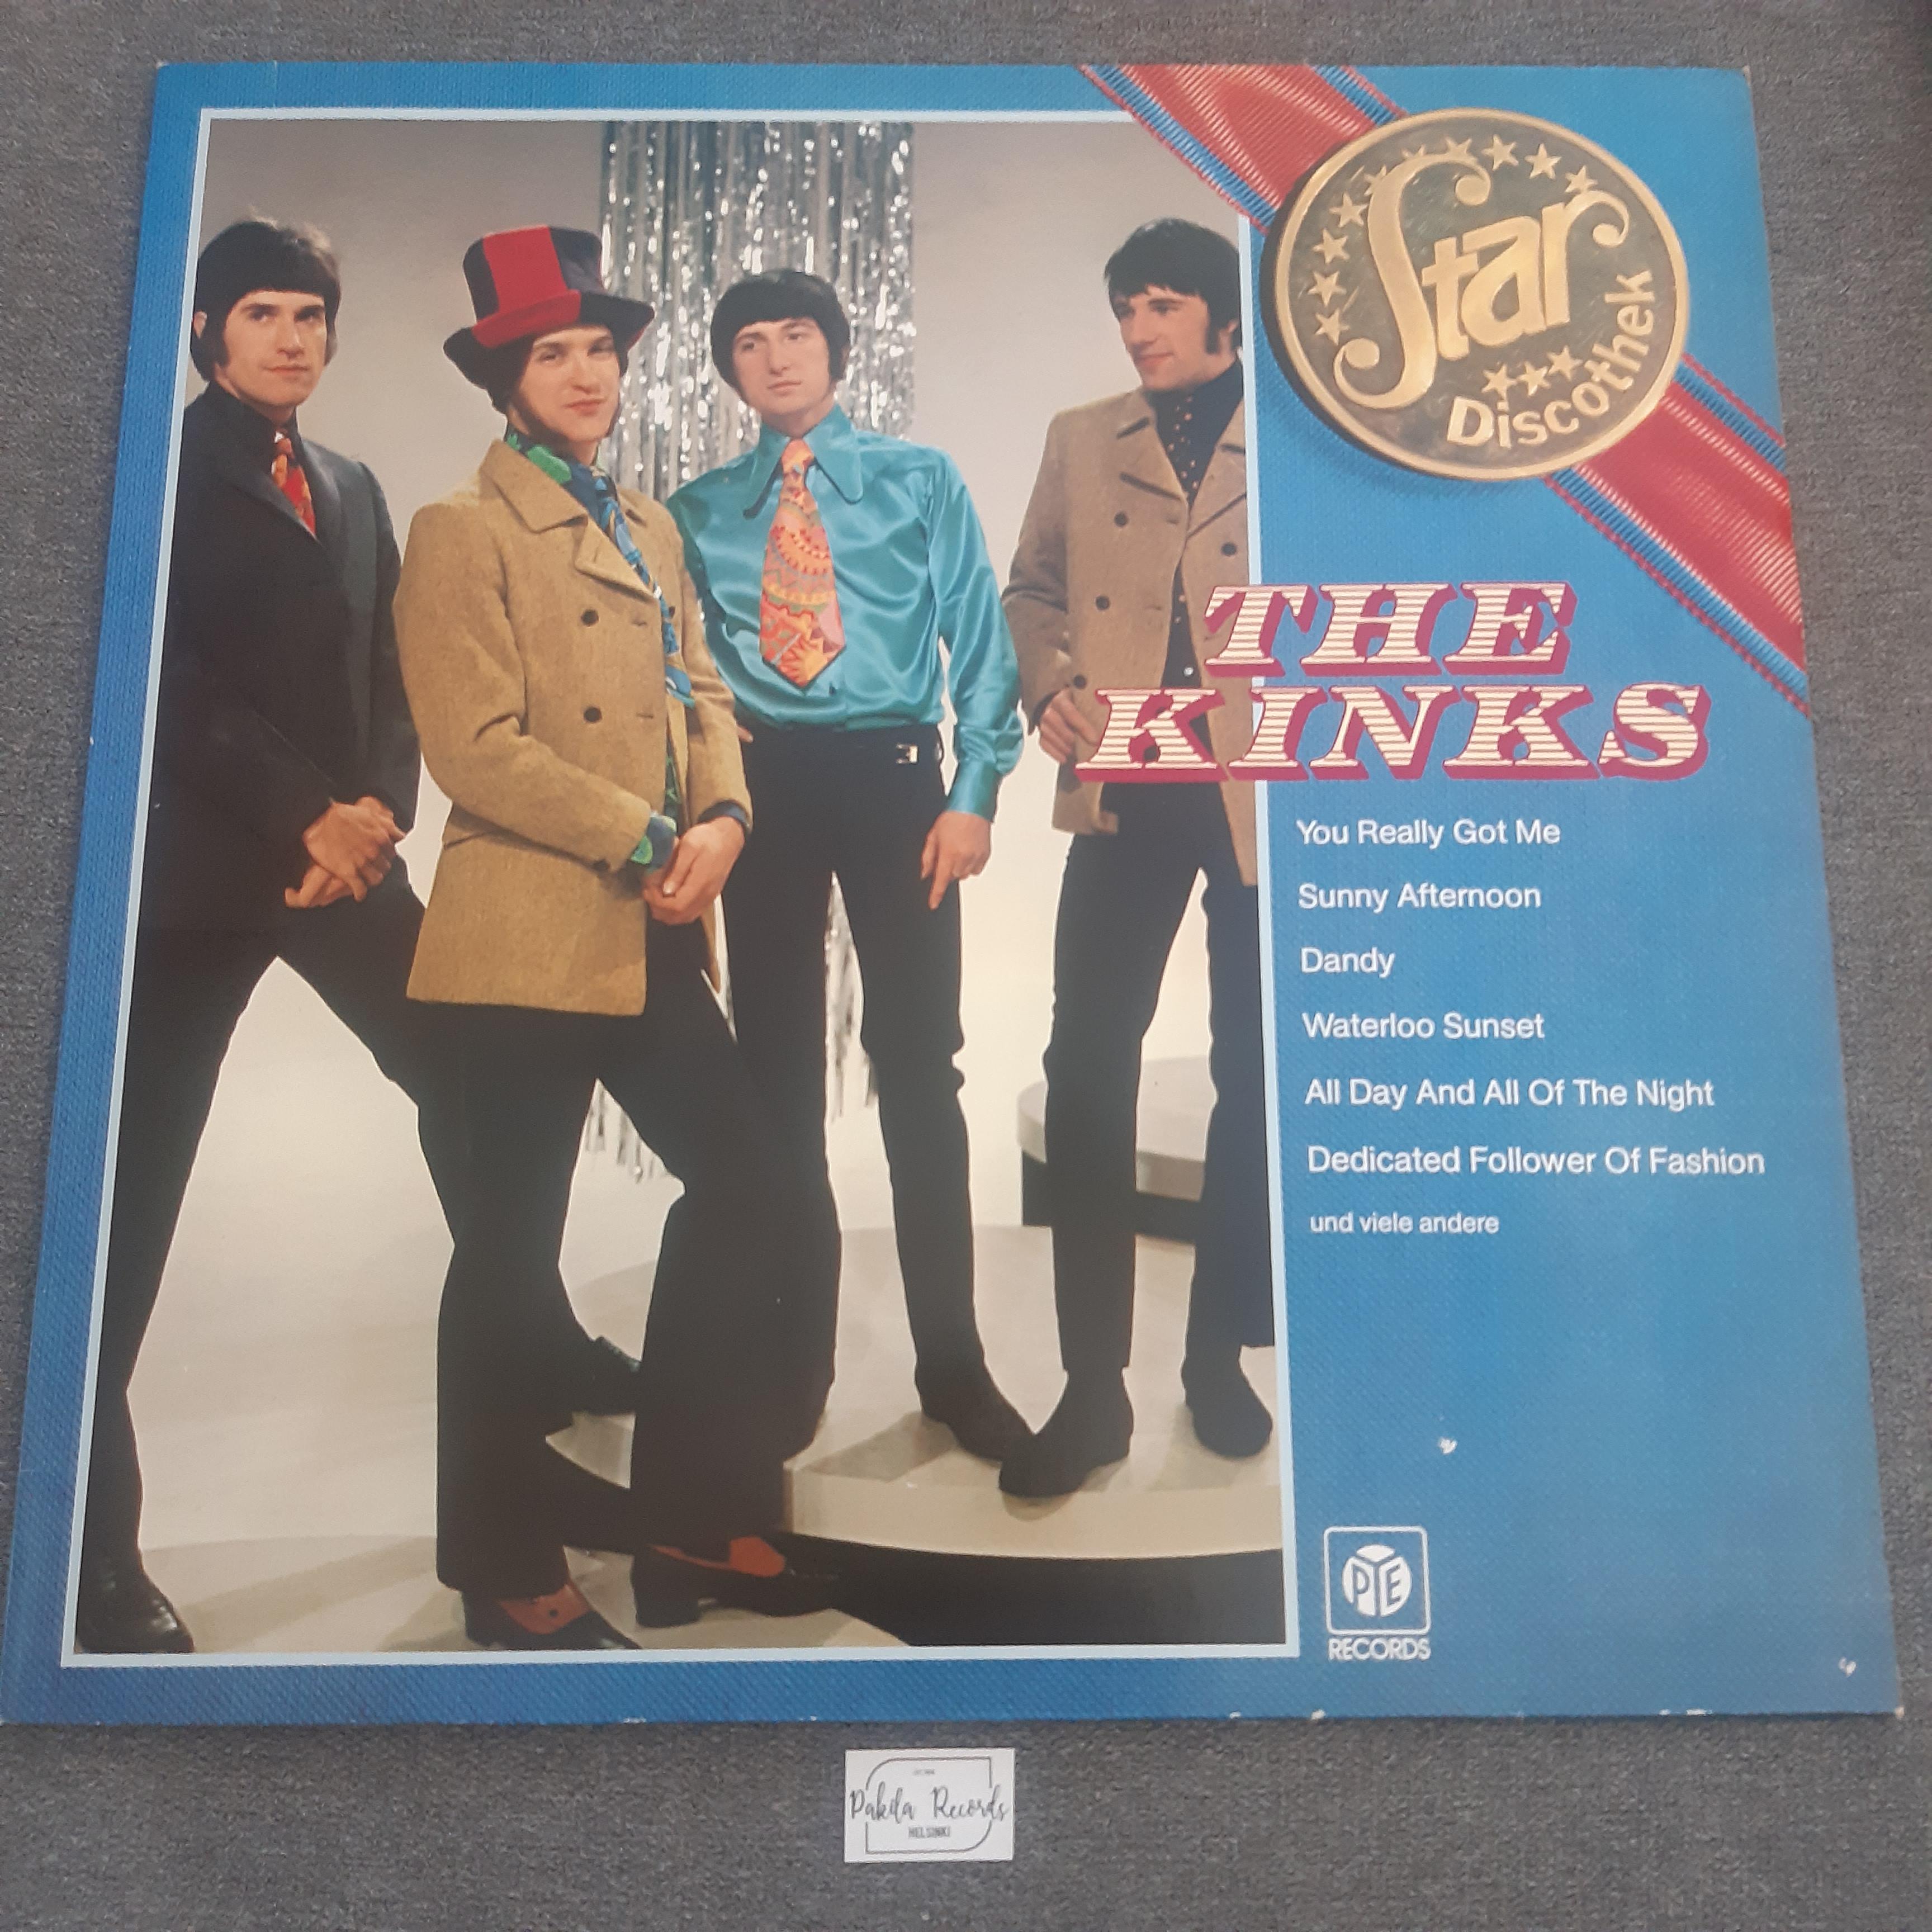 The Kinks - Star Discothek - LP (käytetty)